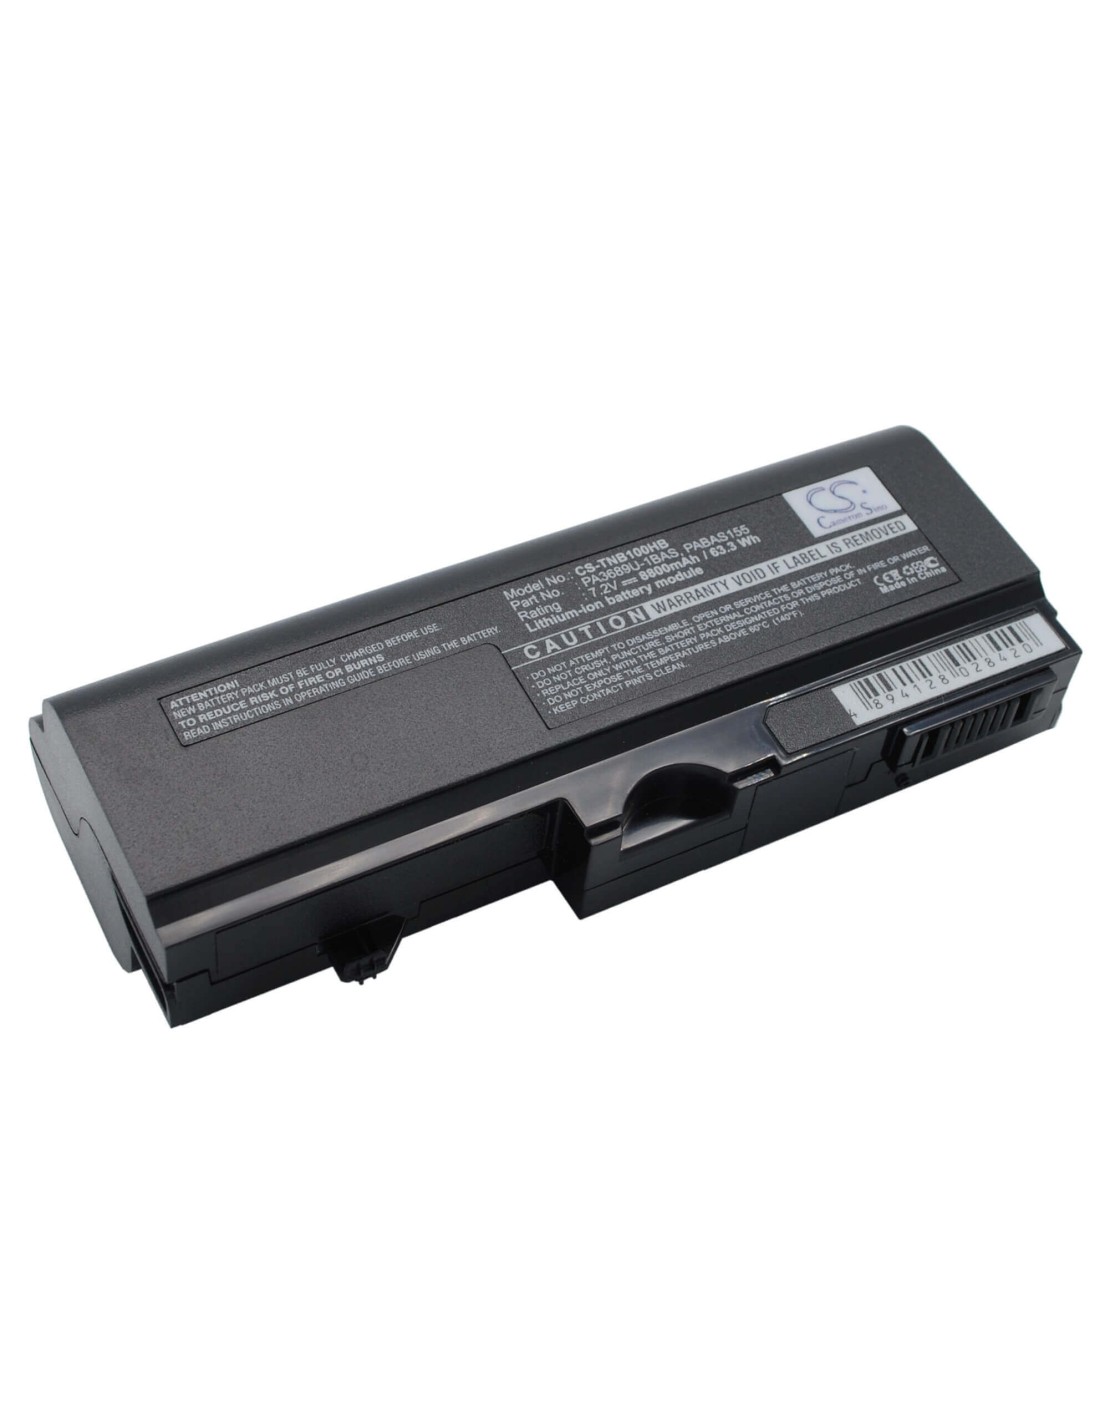 Black Battery for Toshiba Netbook Nb100, Netbook Nb100-01g, Netbook Nb100-111 7.2V, 8800mAh - 63.36Wh